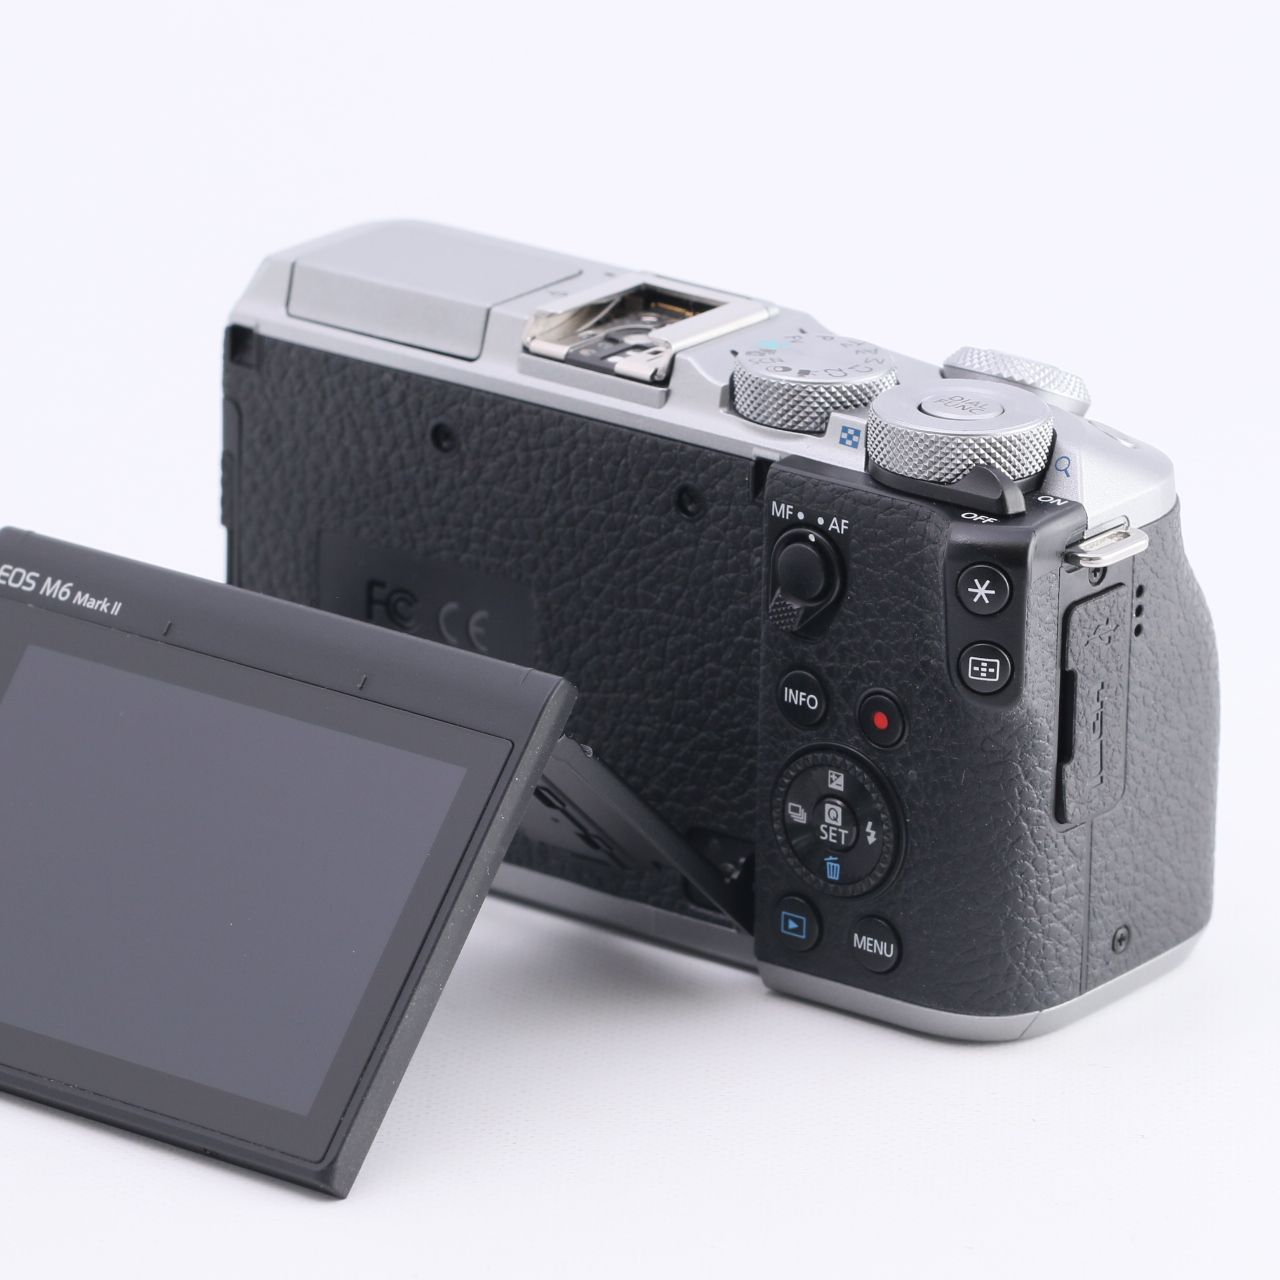 Canon ミラーレス一眼カメラ EOS M6 Mark II ボディー シルバー EOSM6MK2SL-BODY